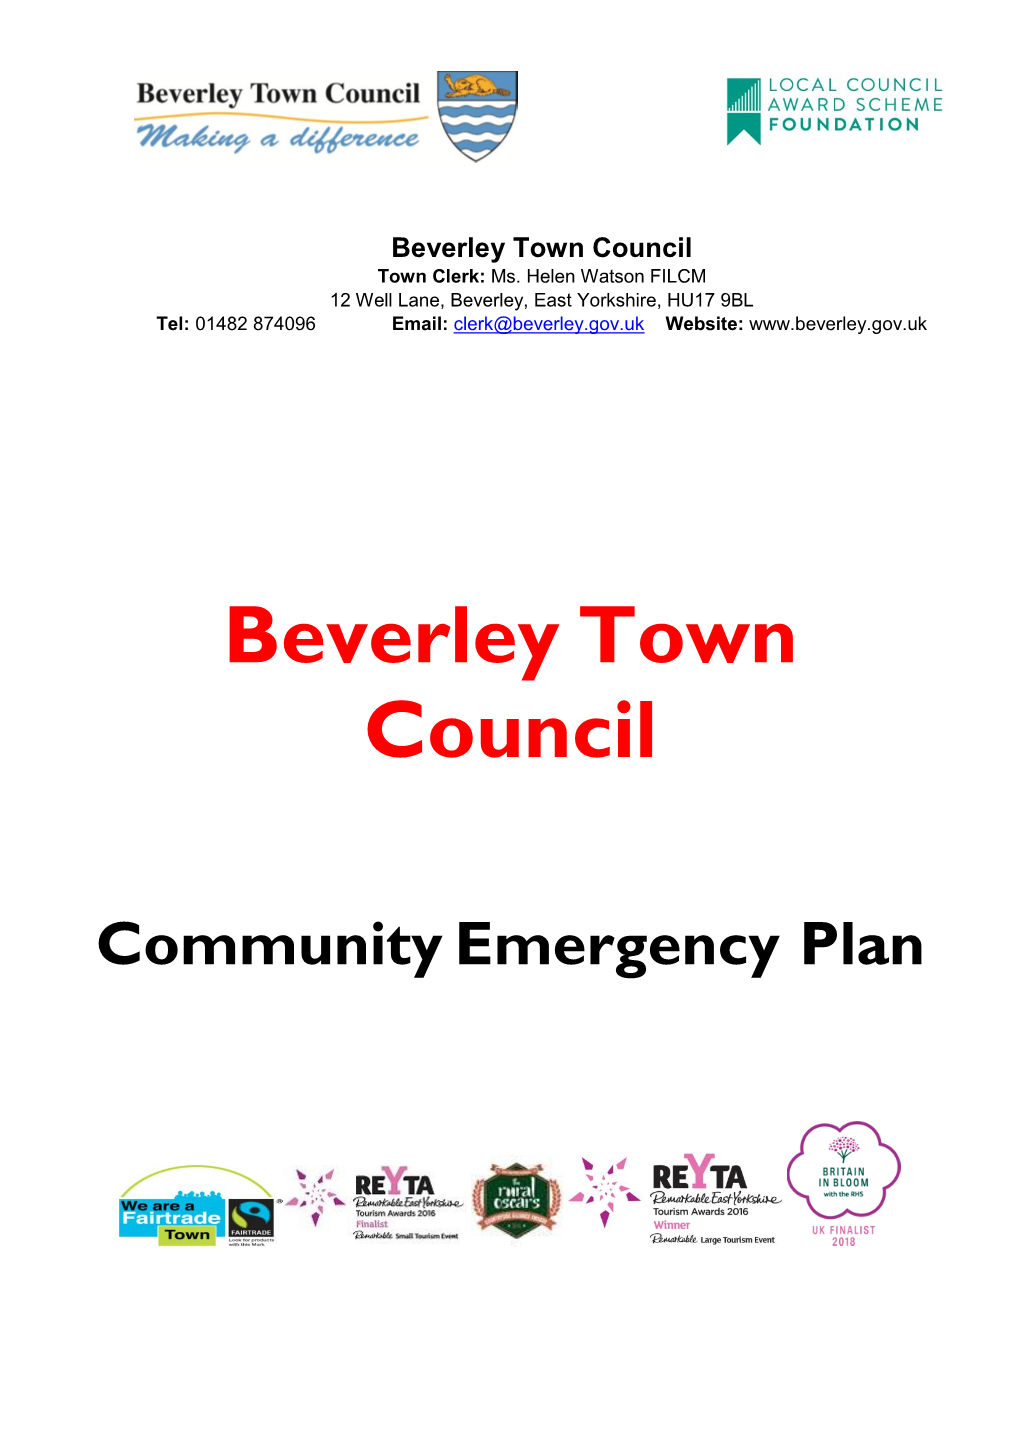 Beverley Town Council Emergency Plan